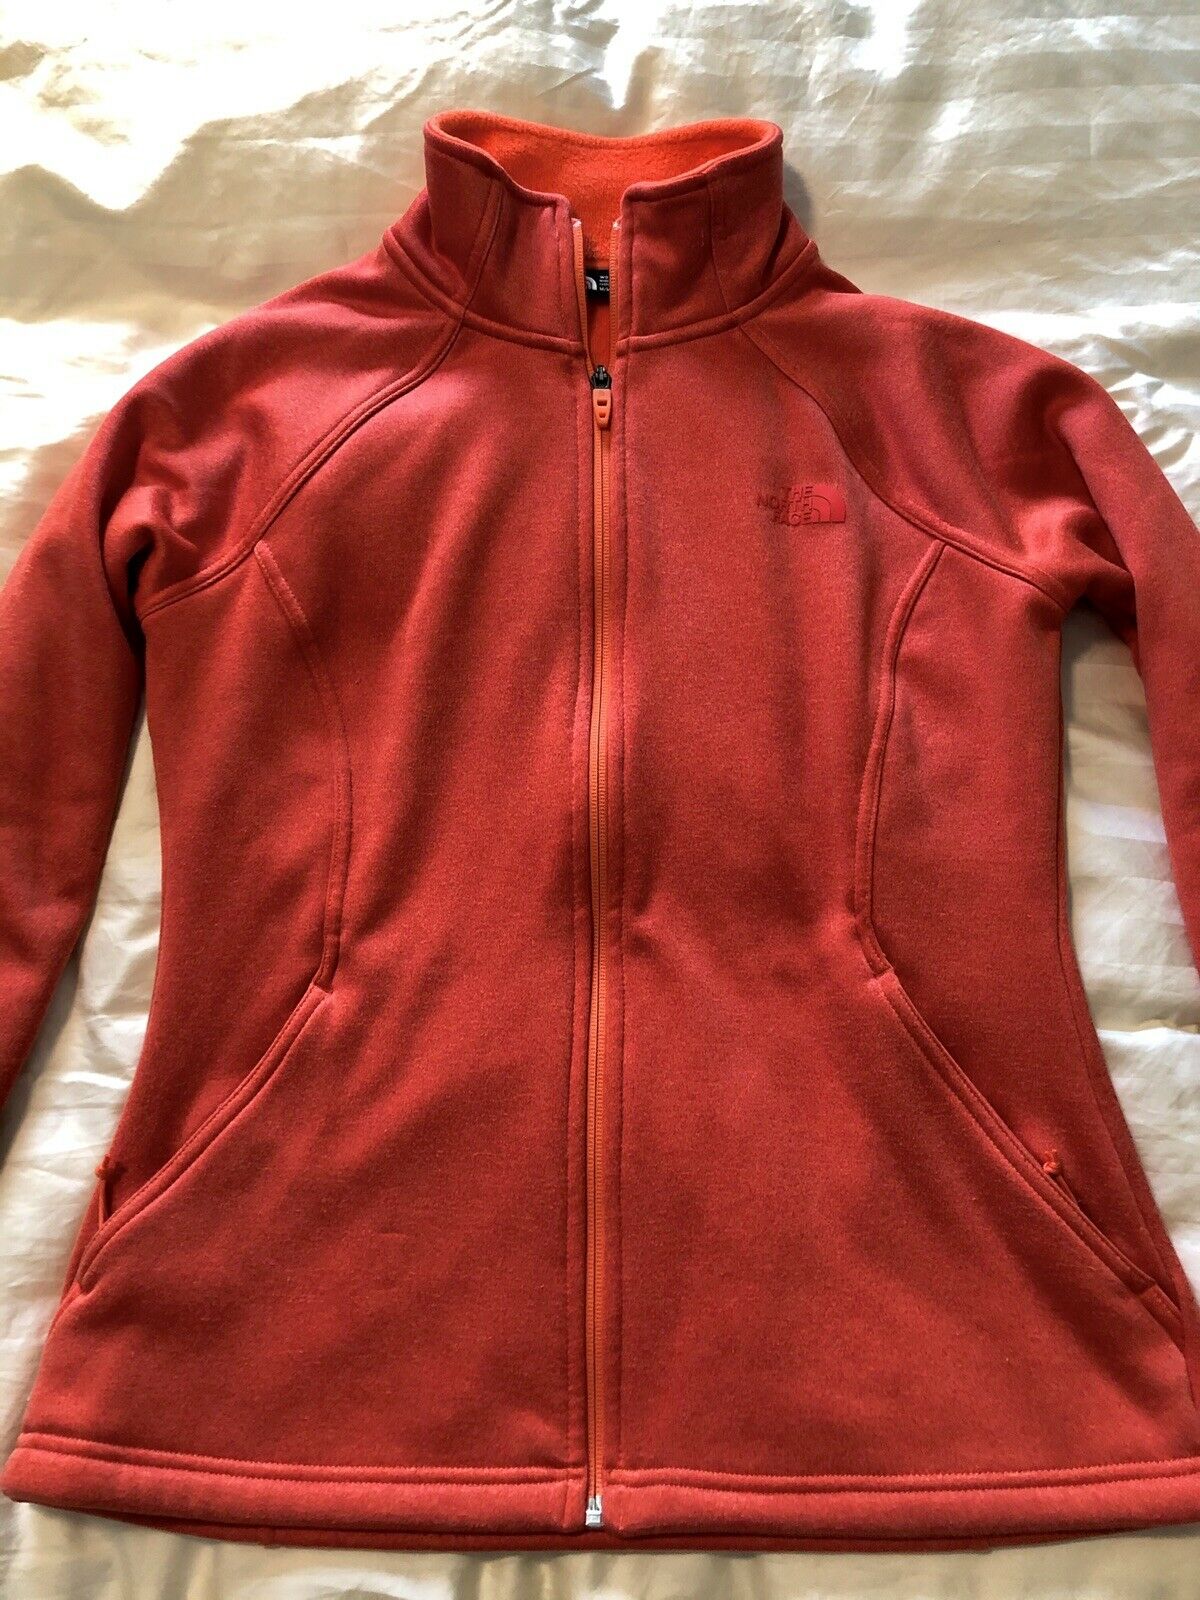 Women’s North Face Orange Knit Fleece Jacket Zip Front - Size M